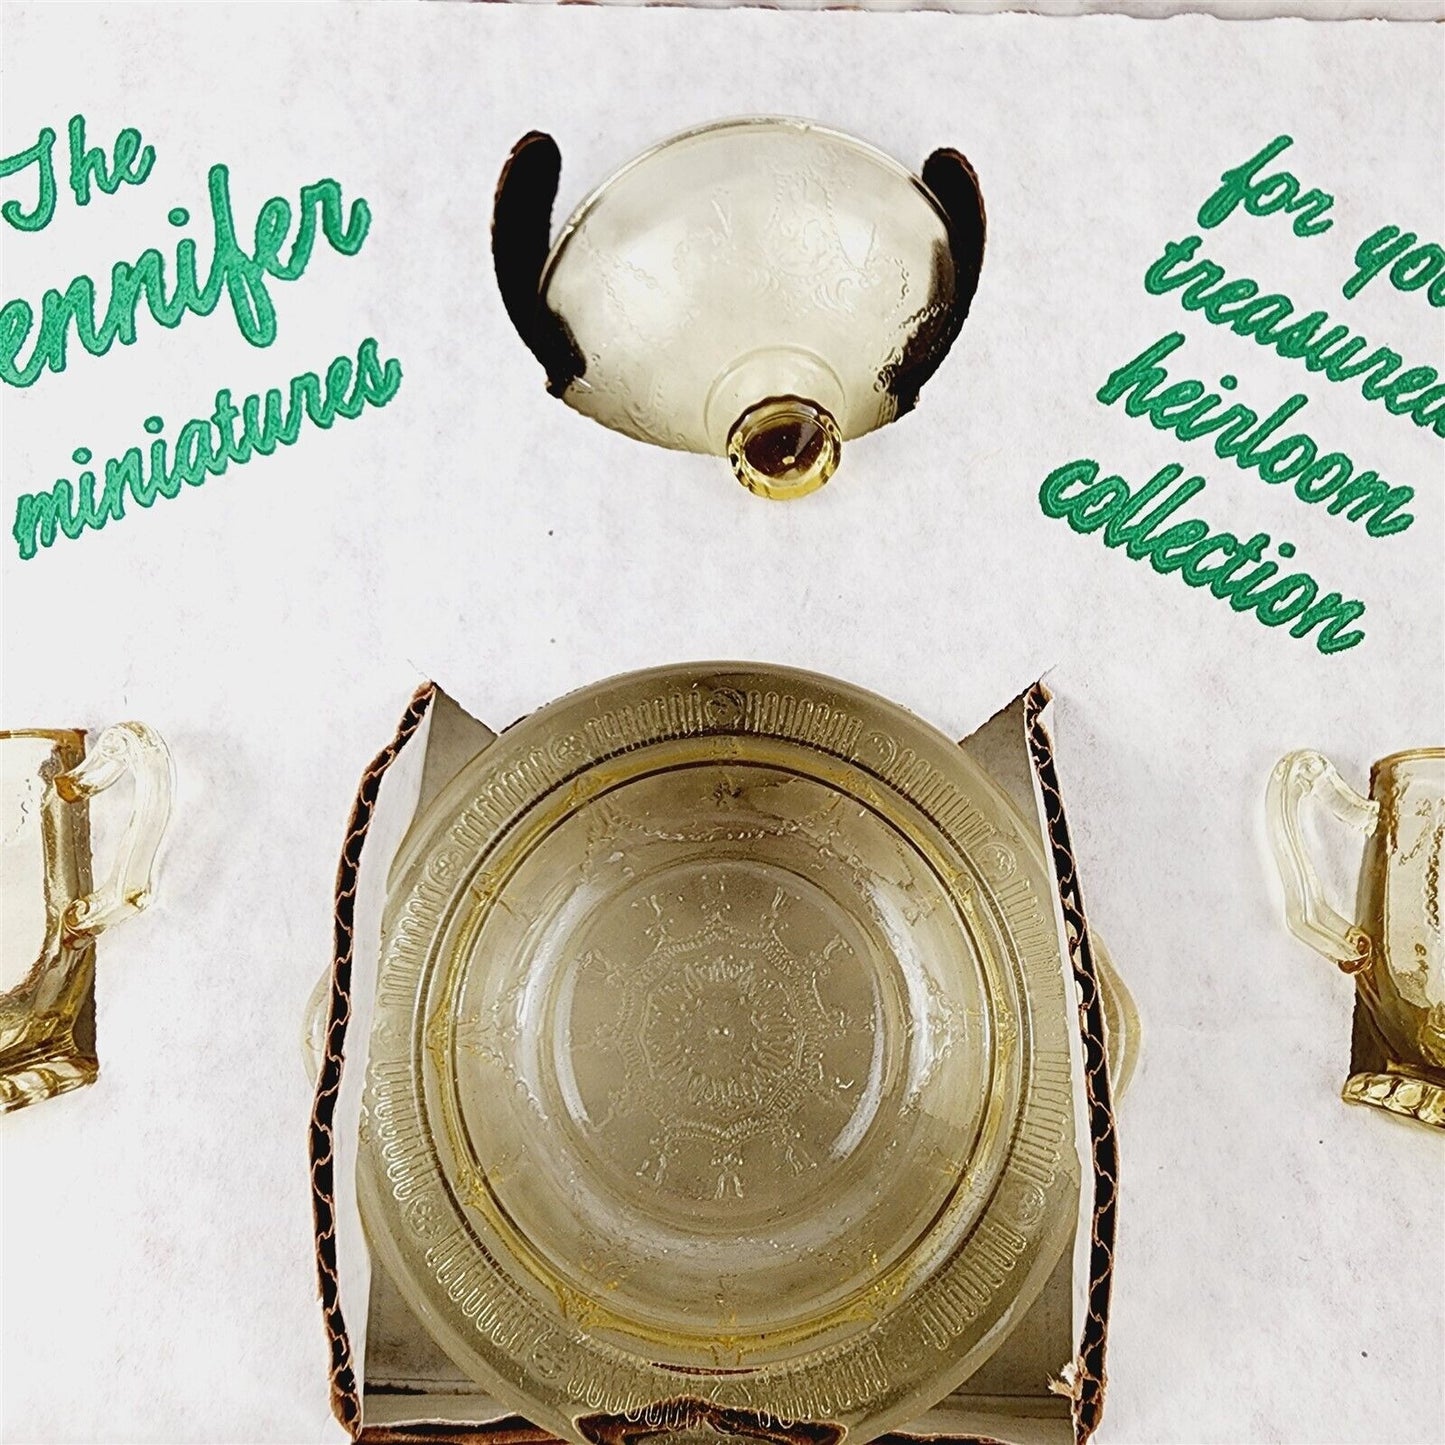 Vintage Mosser Glass Jennifer Set Miniature Gold #1 Creamer Sugar Butter Dish